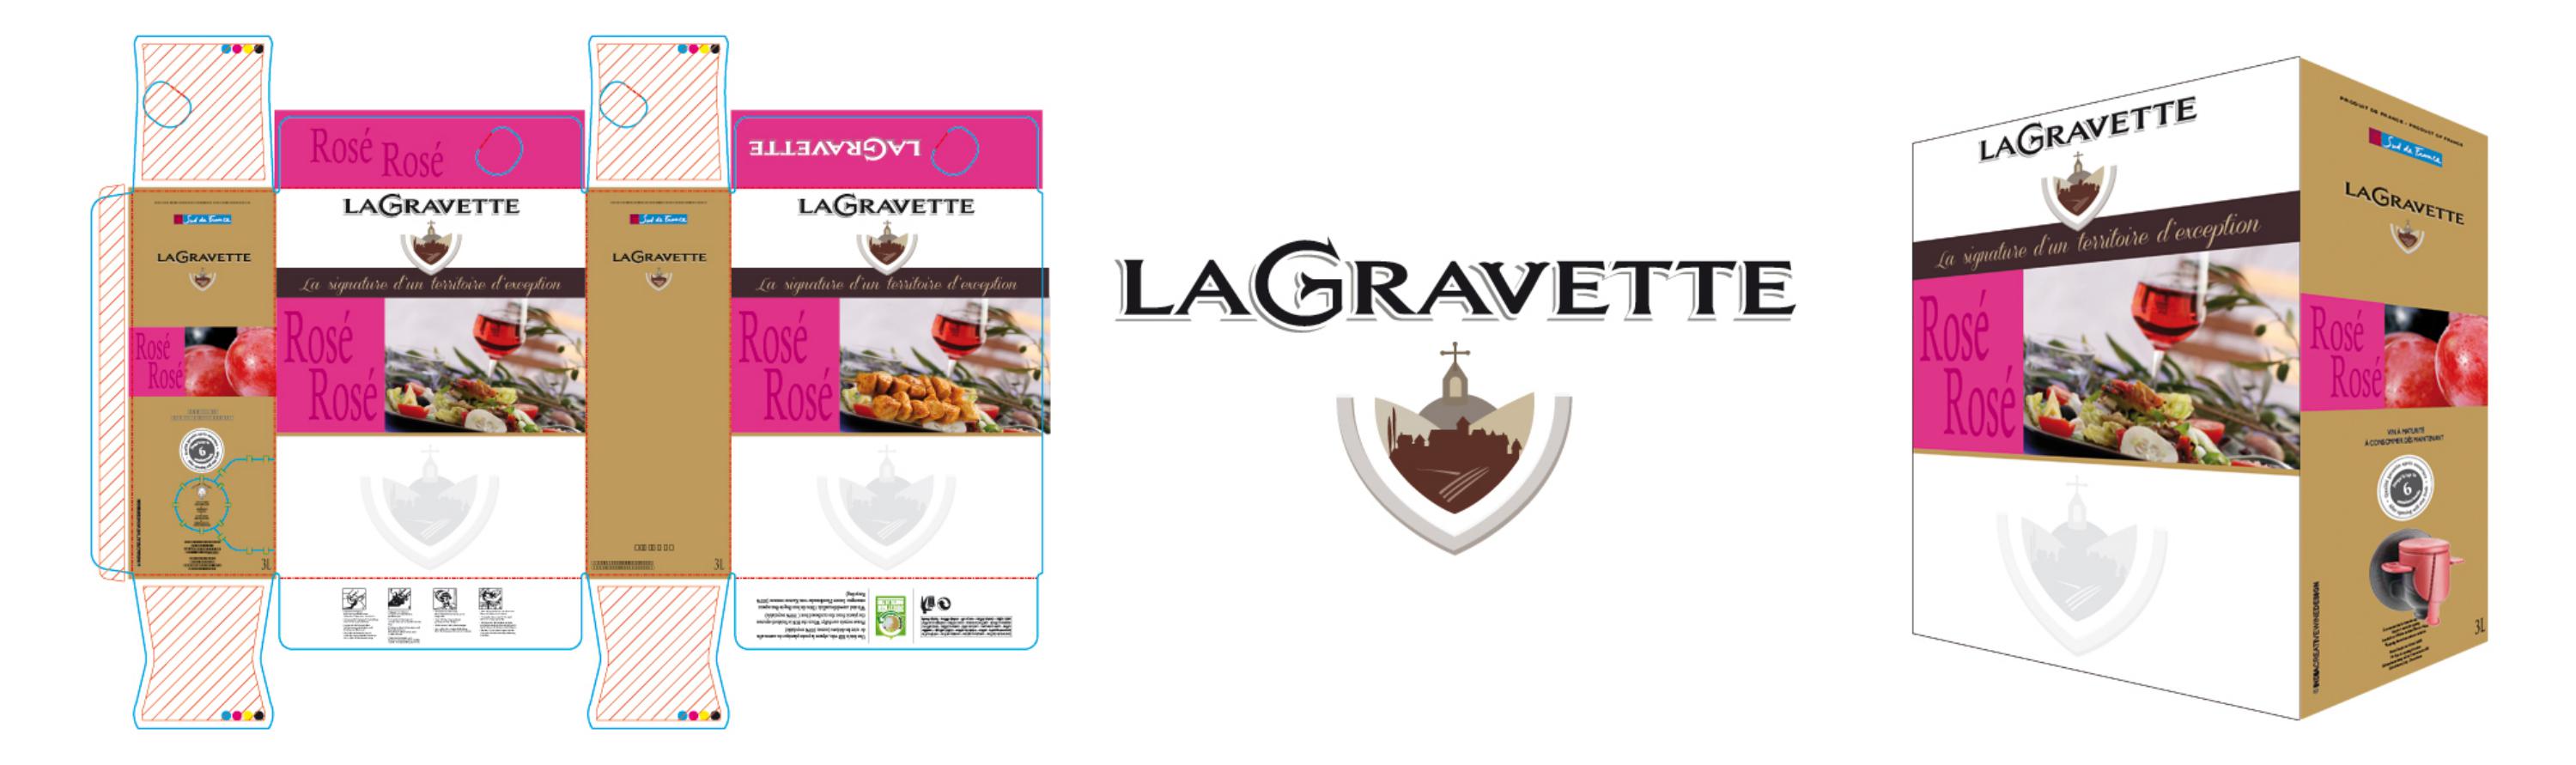 Bag-in-box La Gravette rosé